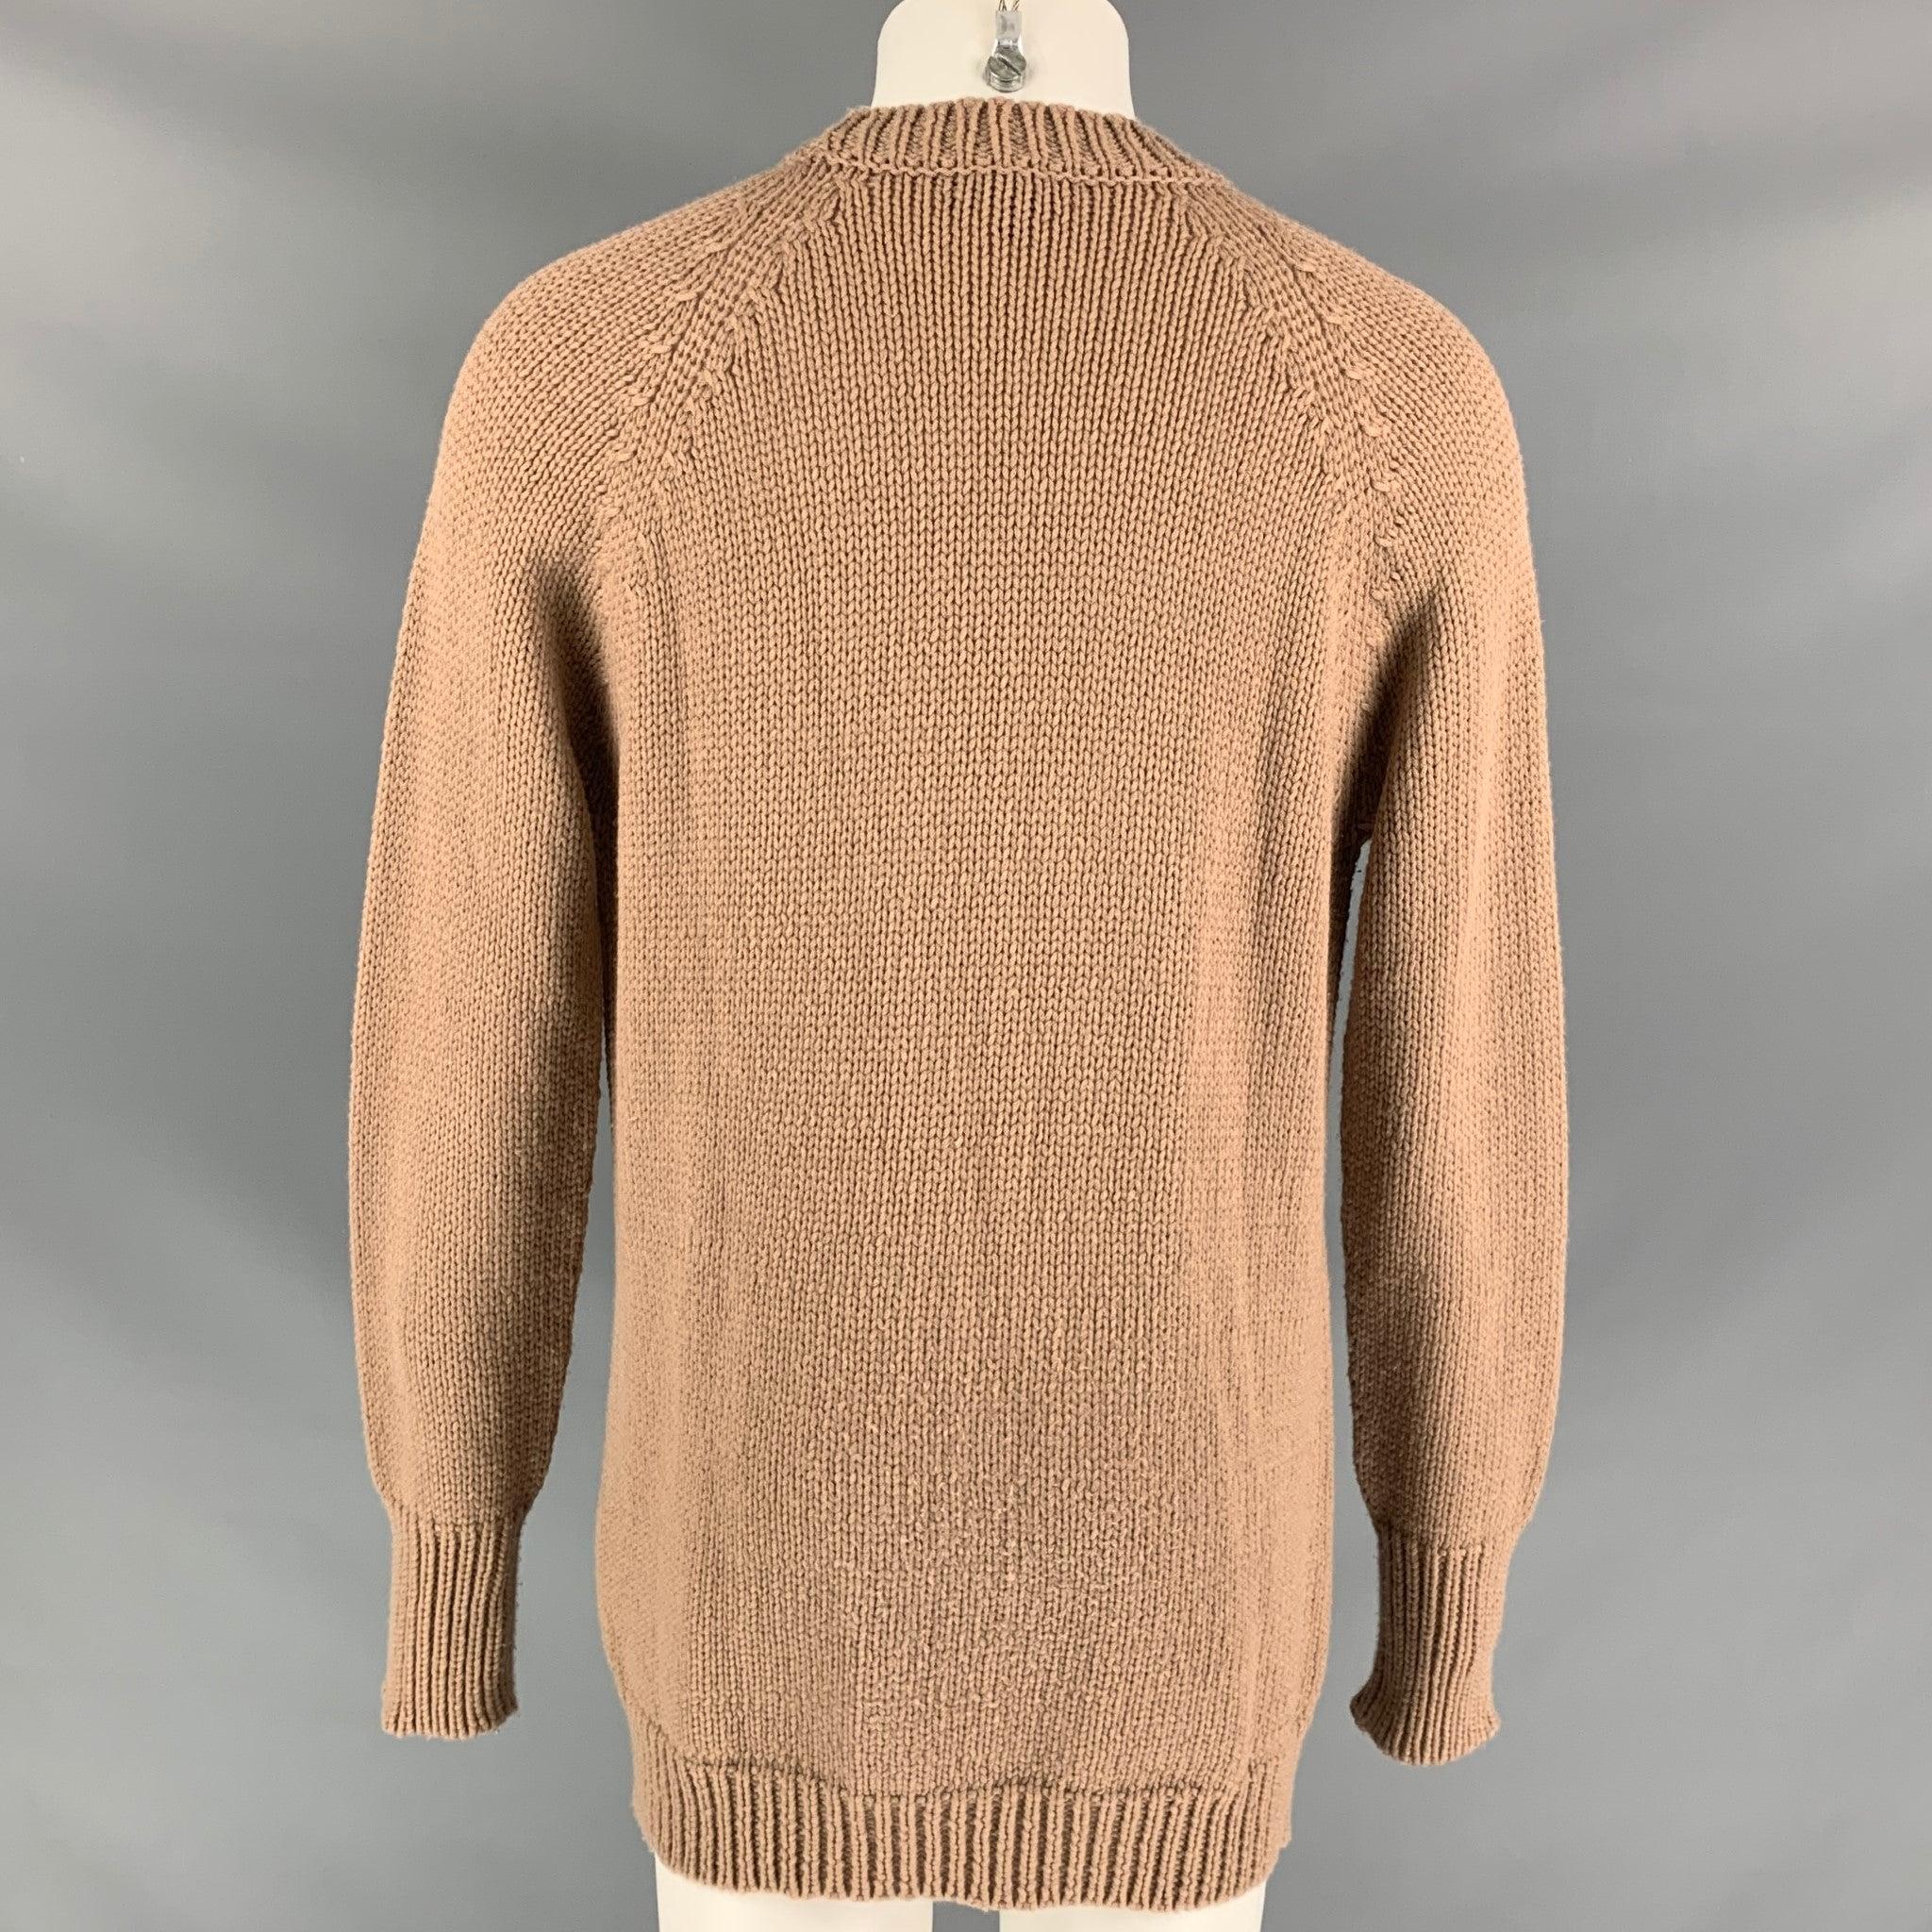 Men's BURBERRY PRORSUM Spring 2015 Size M Tan Cashmere Patch Pocket Cardigan Sweater For Sale